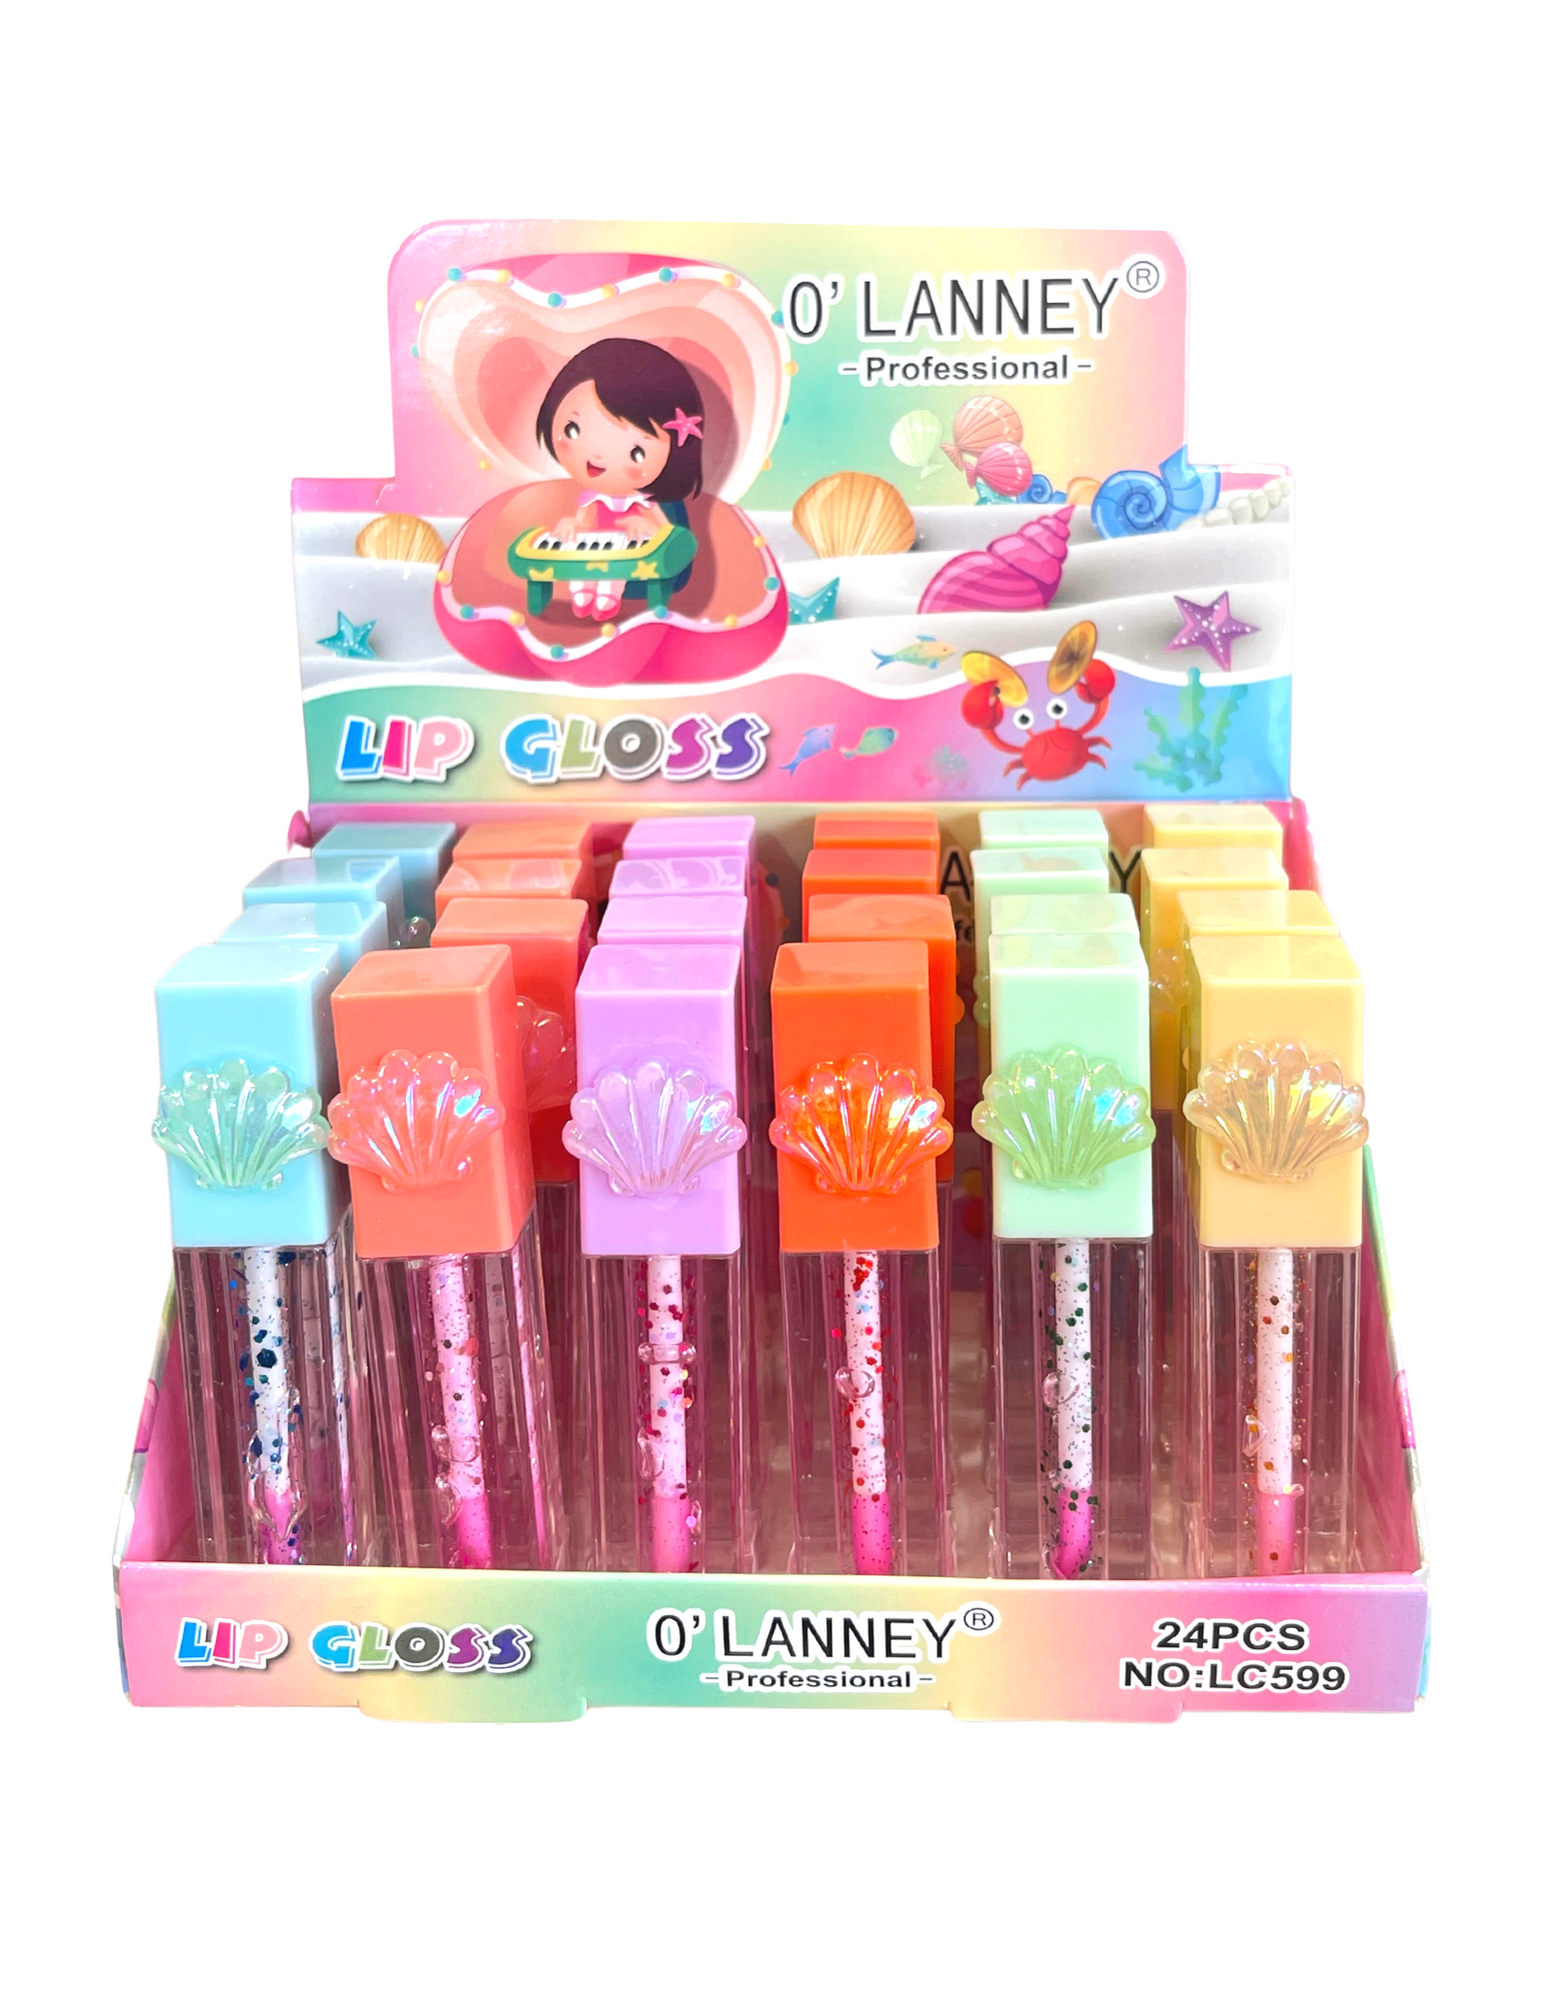 O'LANNEY - LIP GLOSS SHELLS - DISPLAY 24 PC